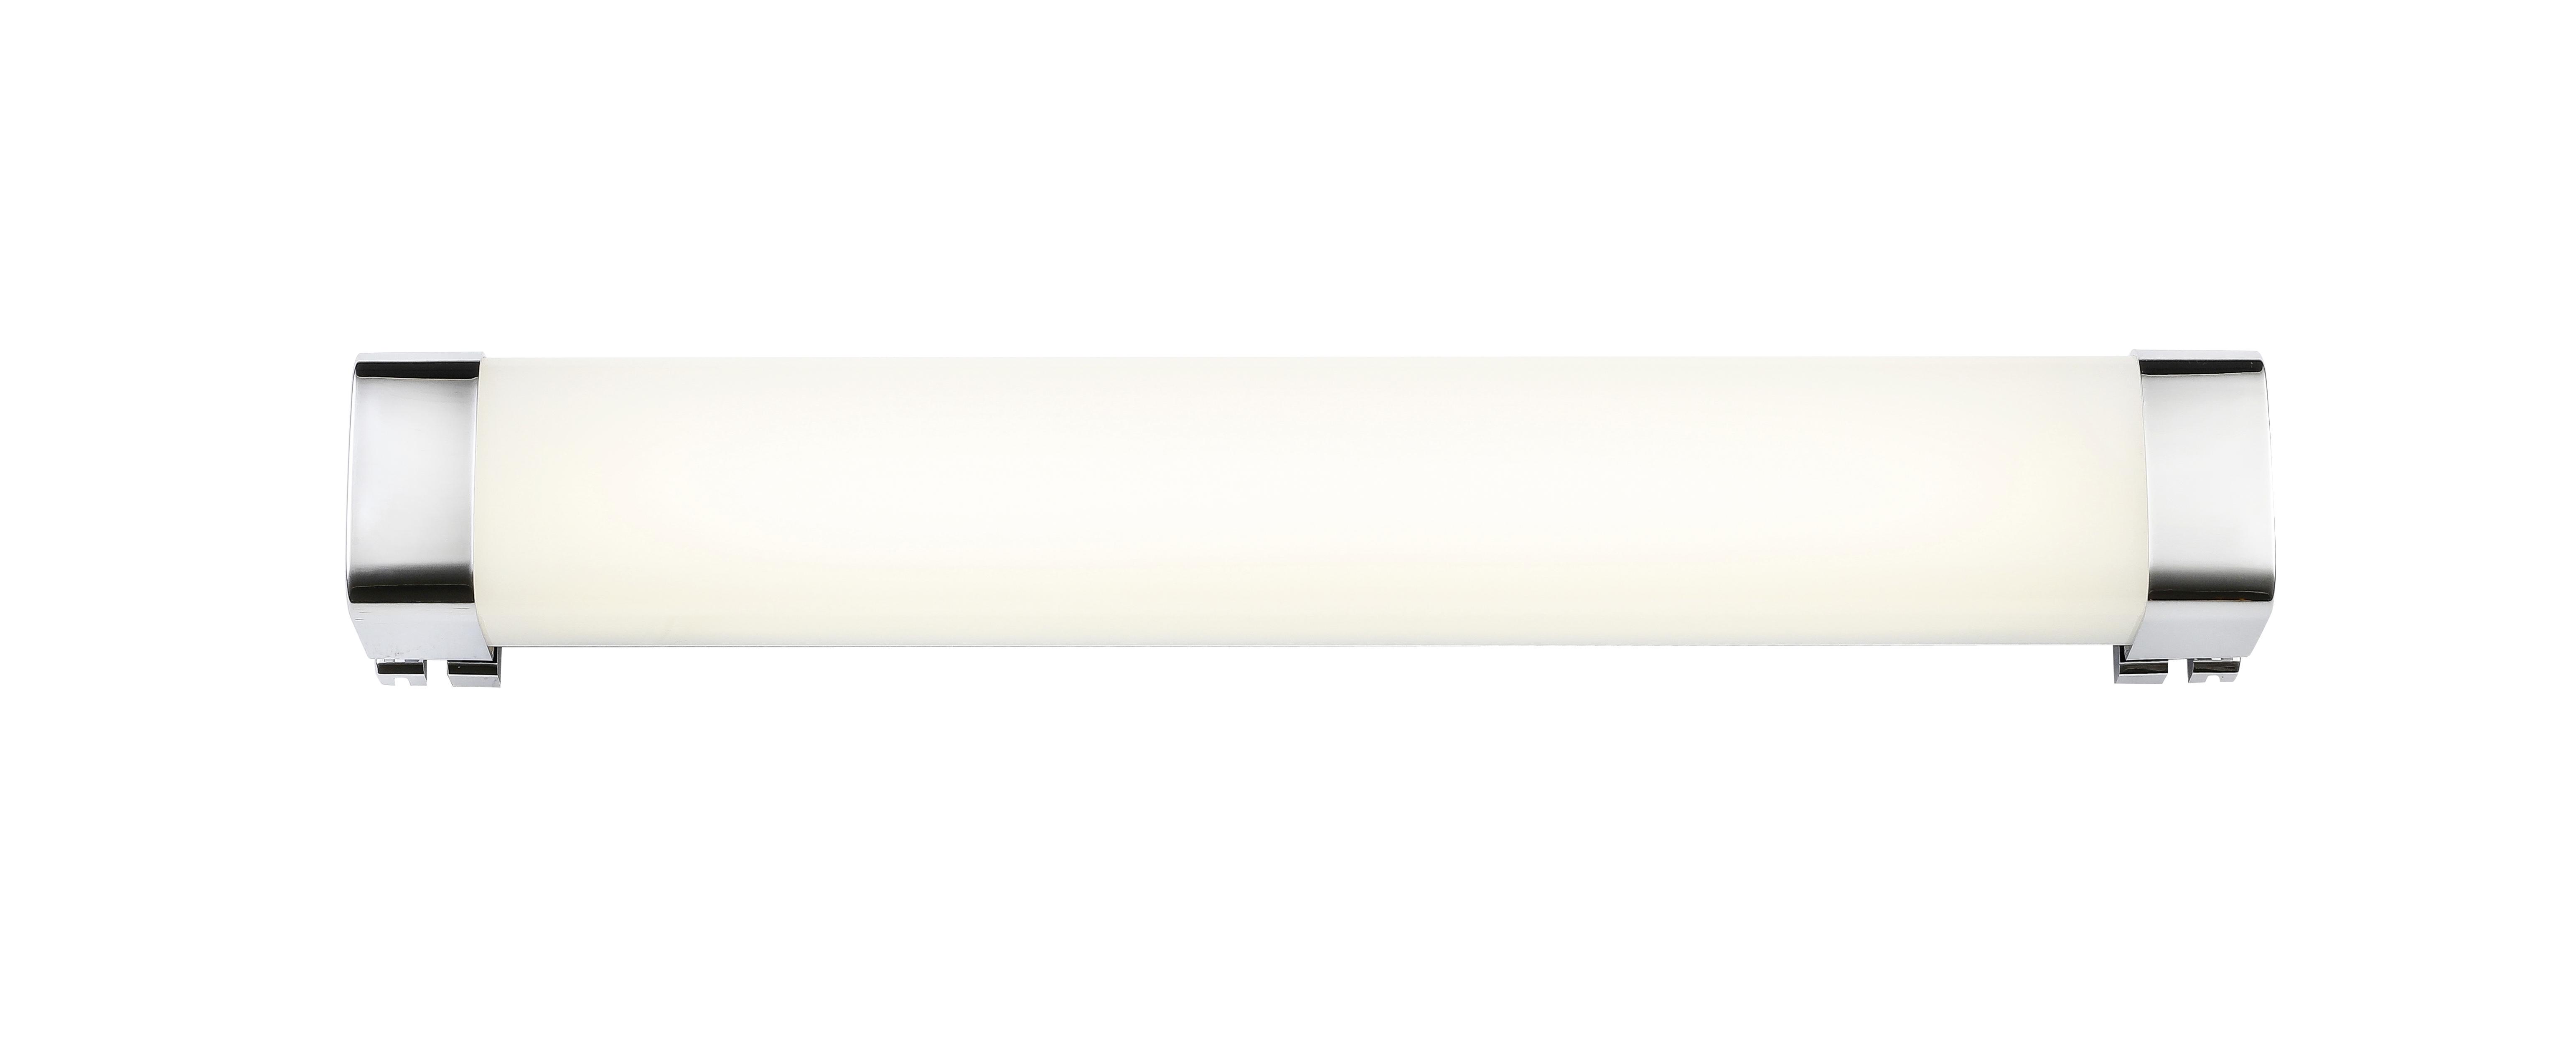 Stenska Svetilka Za Kopalnico Lisbeth1 - barve kroma/bela, Romantika, umetna masa (37,8/5,6/5,8cm) - Modern Living